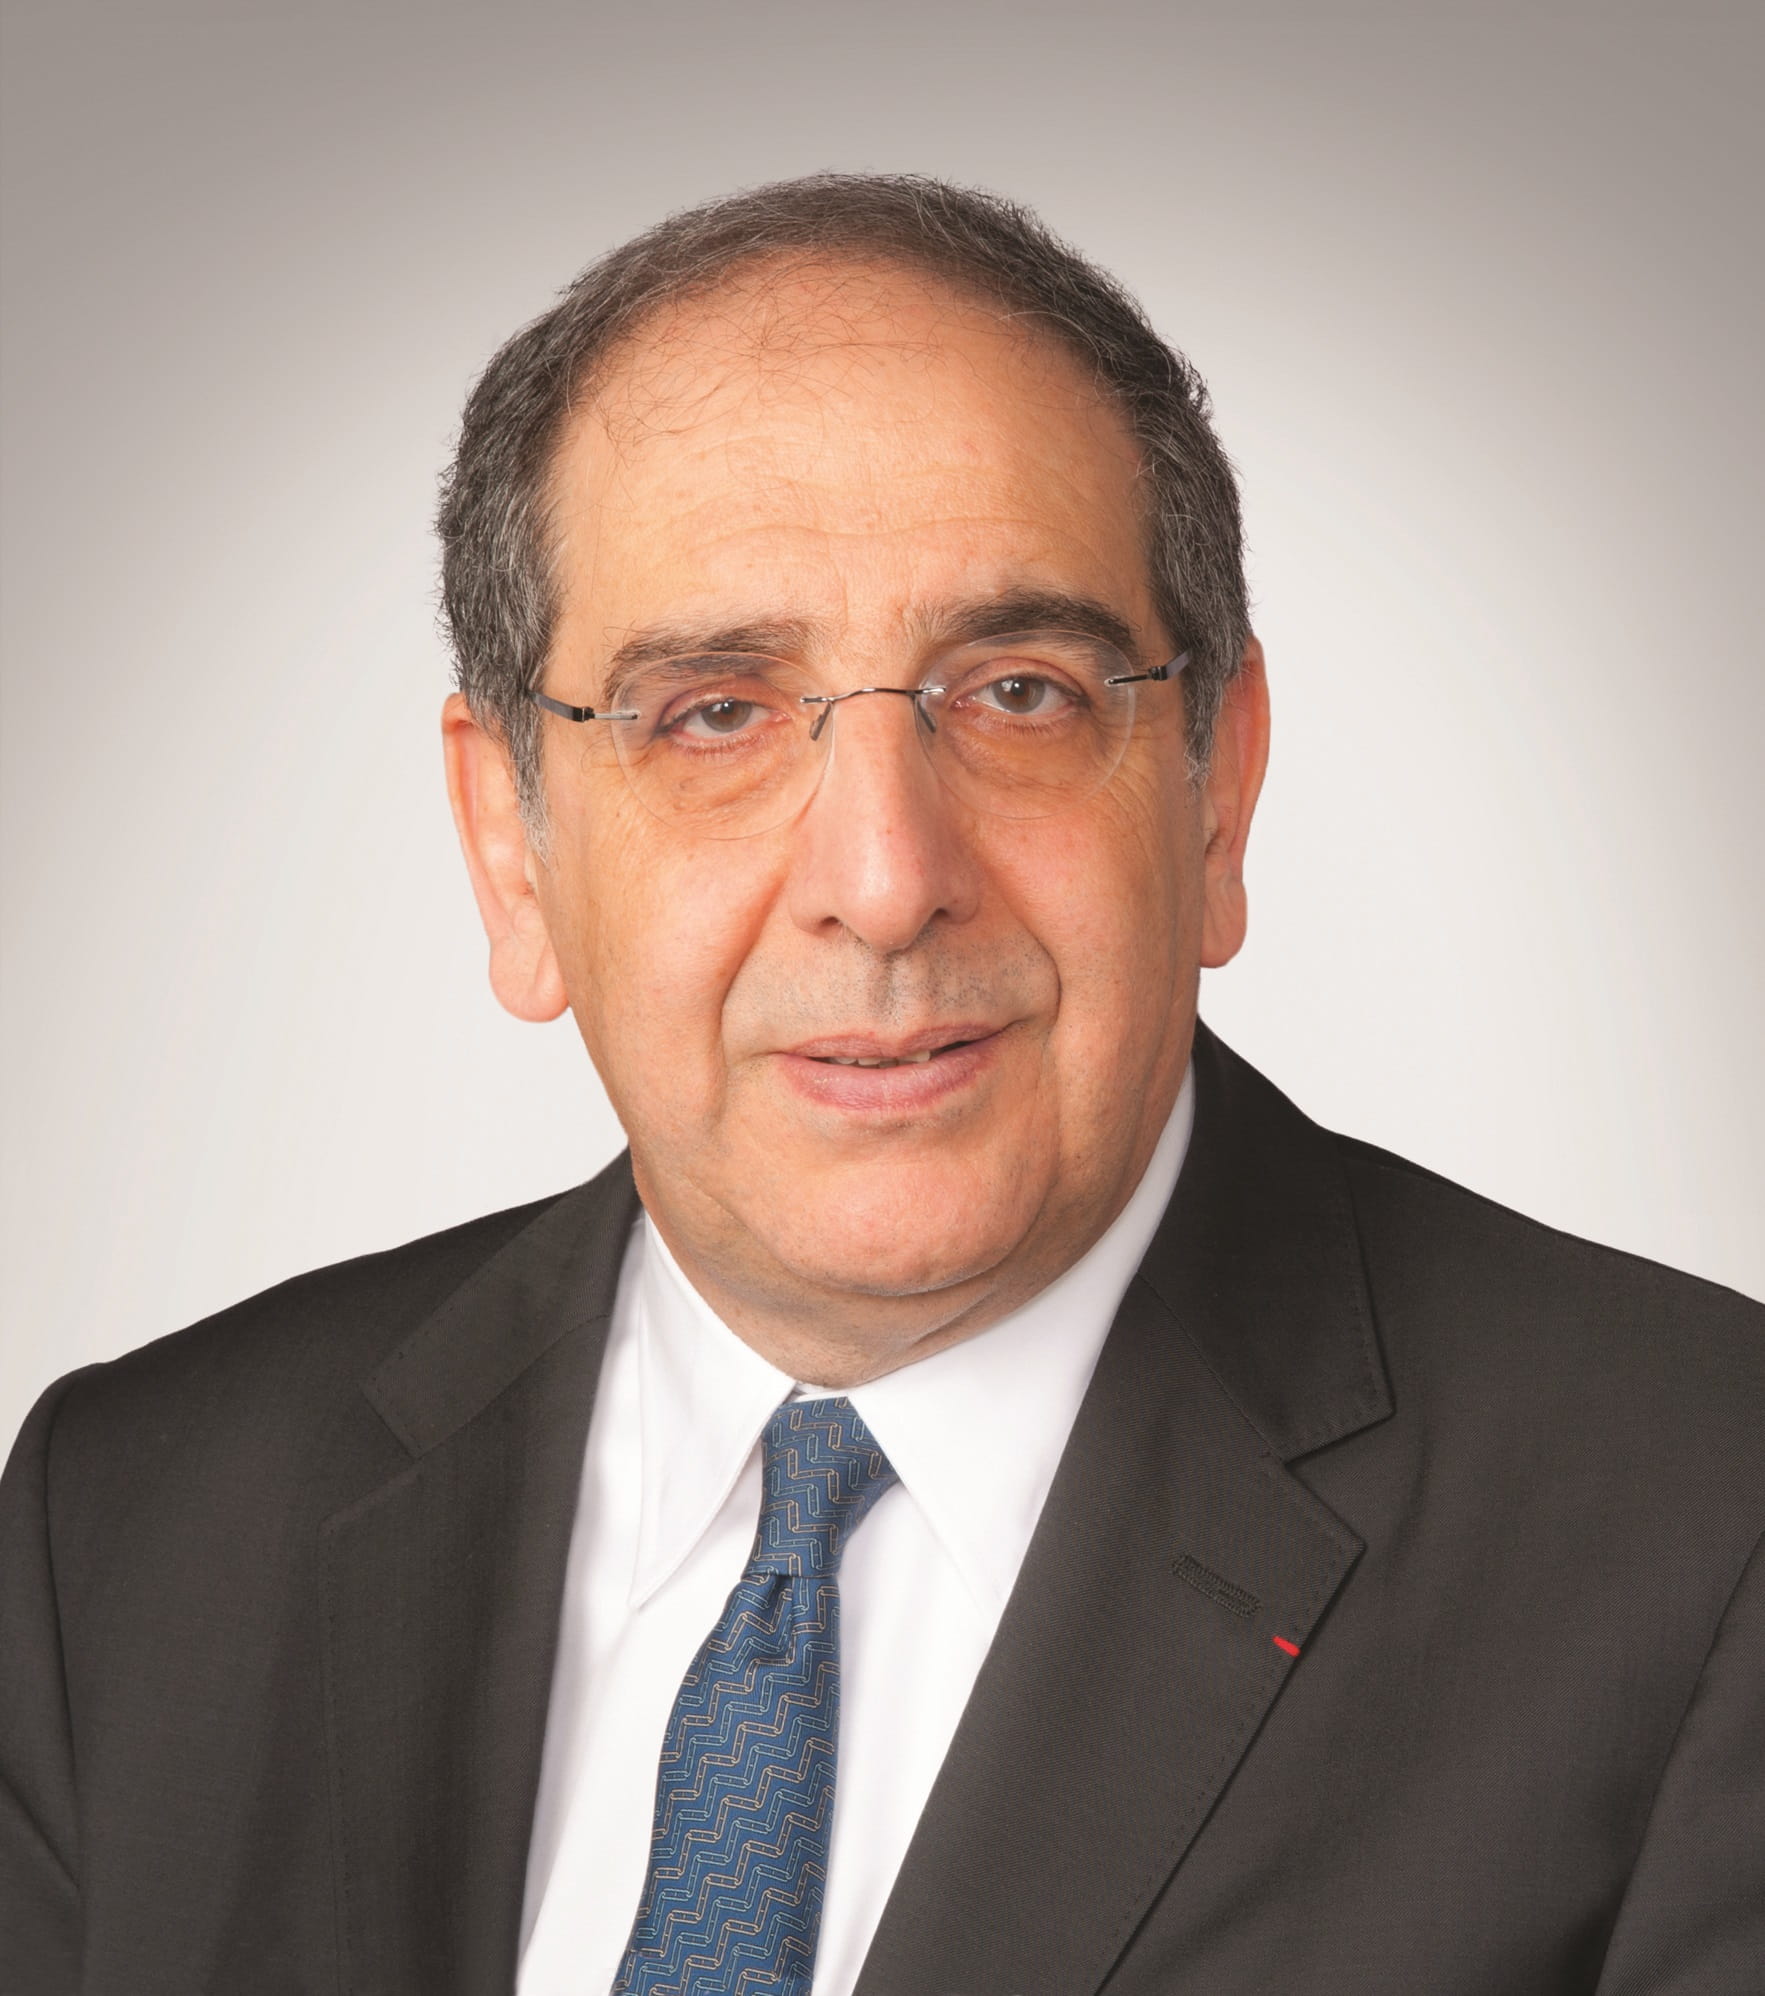 Dr. José-Alain Sahel